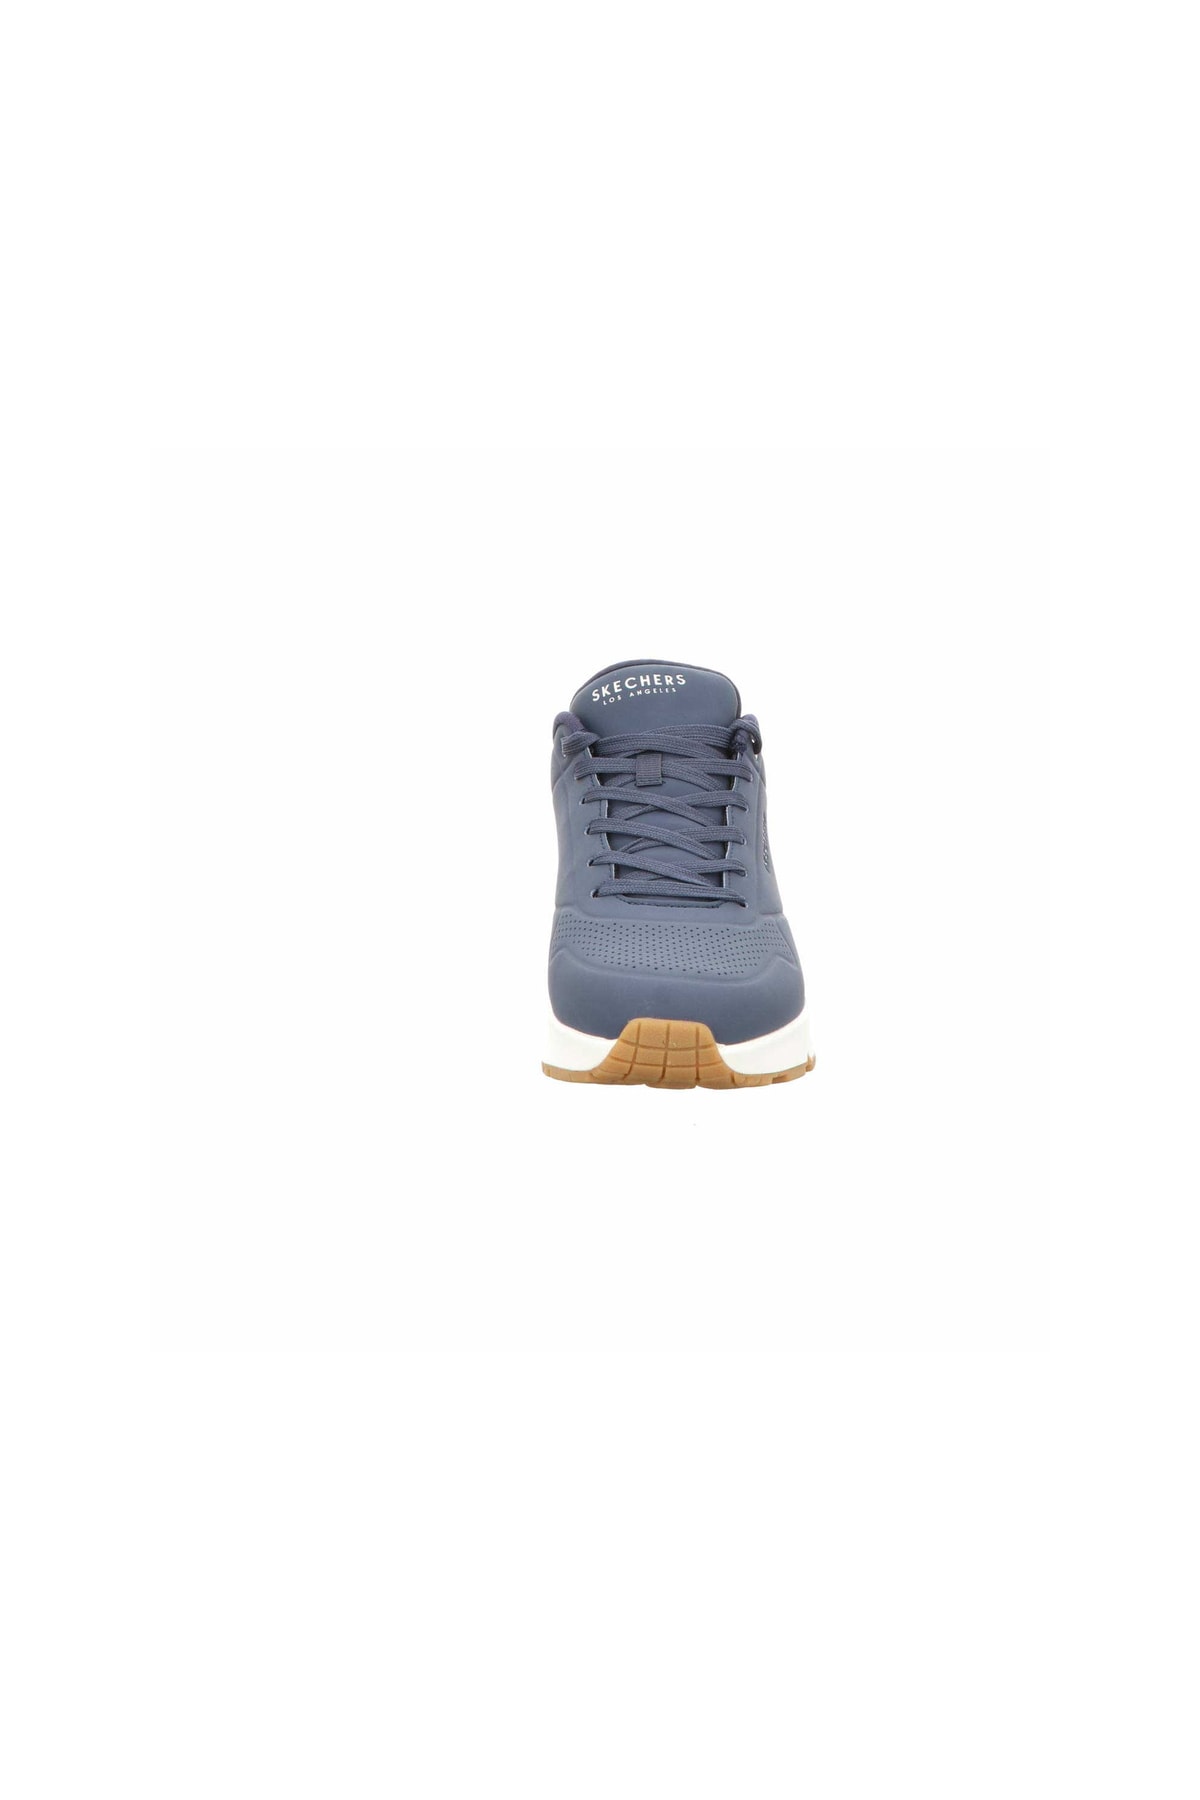 SKECHERS Sneaker Blau Flacher Absatz Fast ausverkauft FN8417